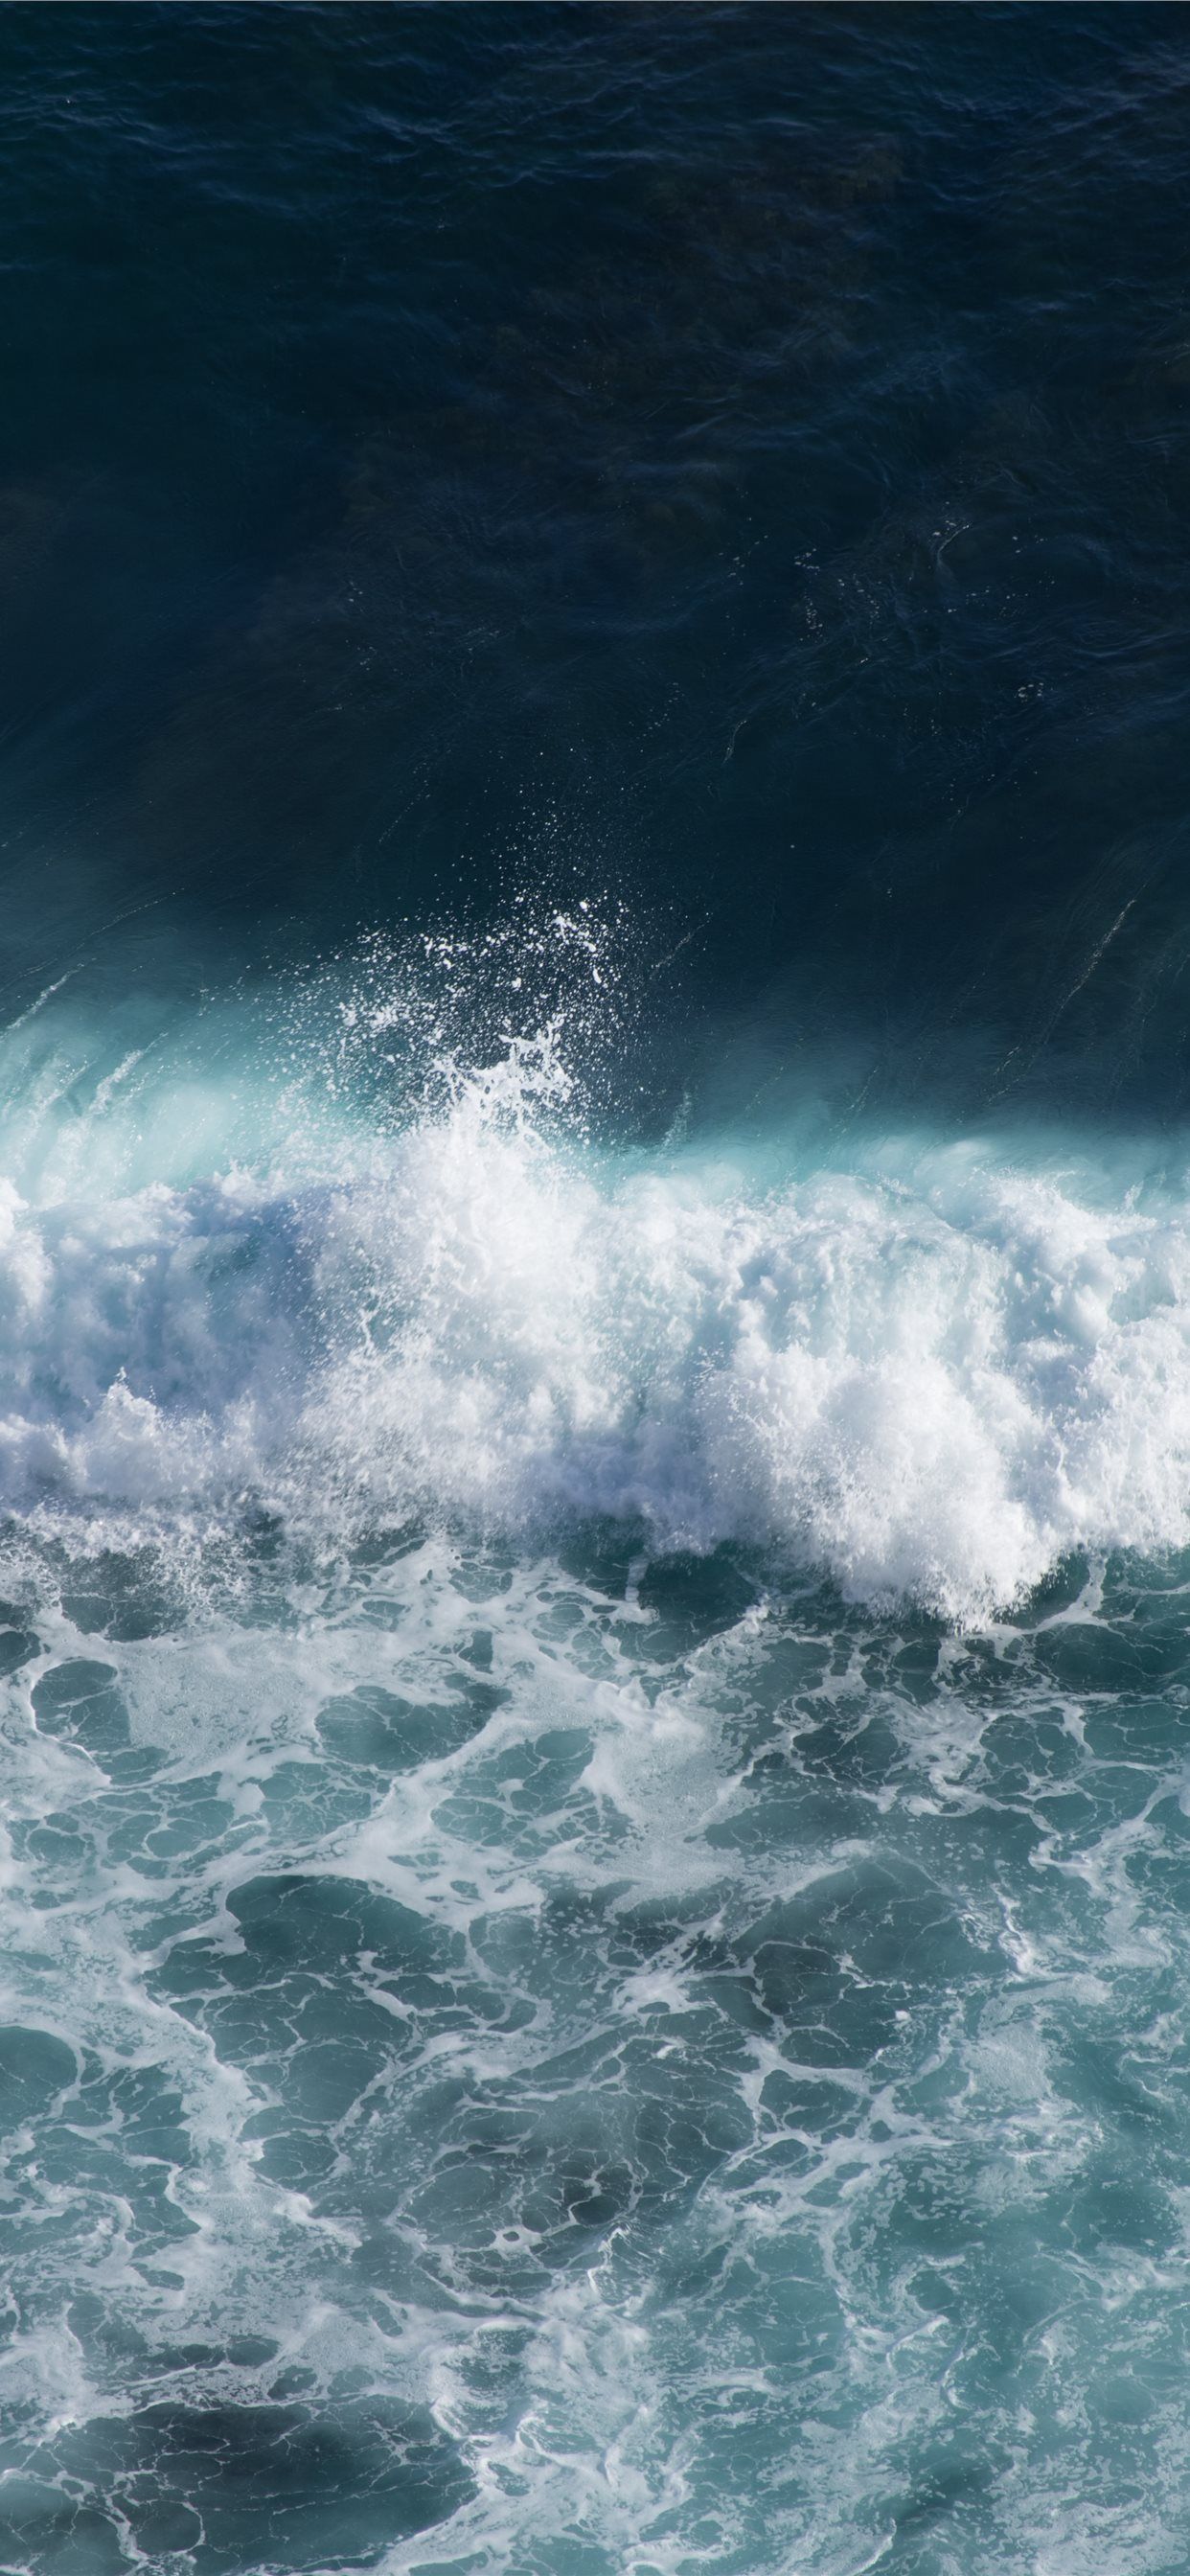 sea waves iPhone Wallpaper Free Download